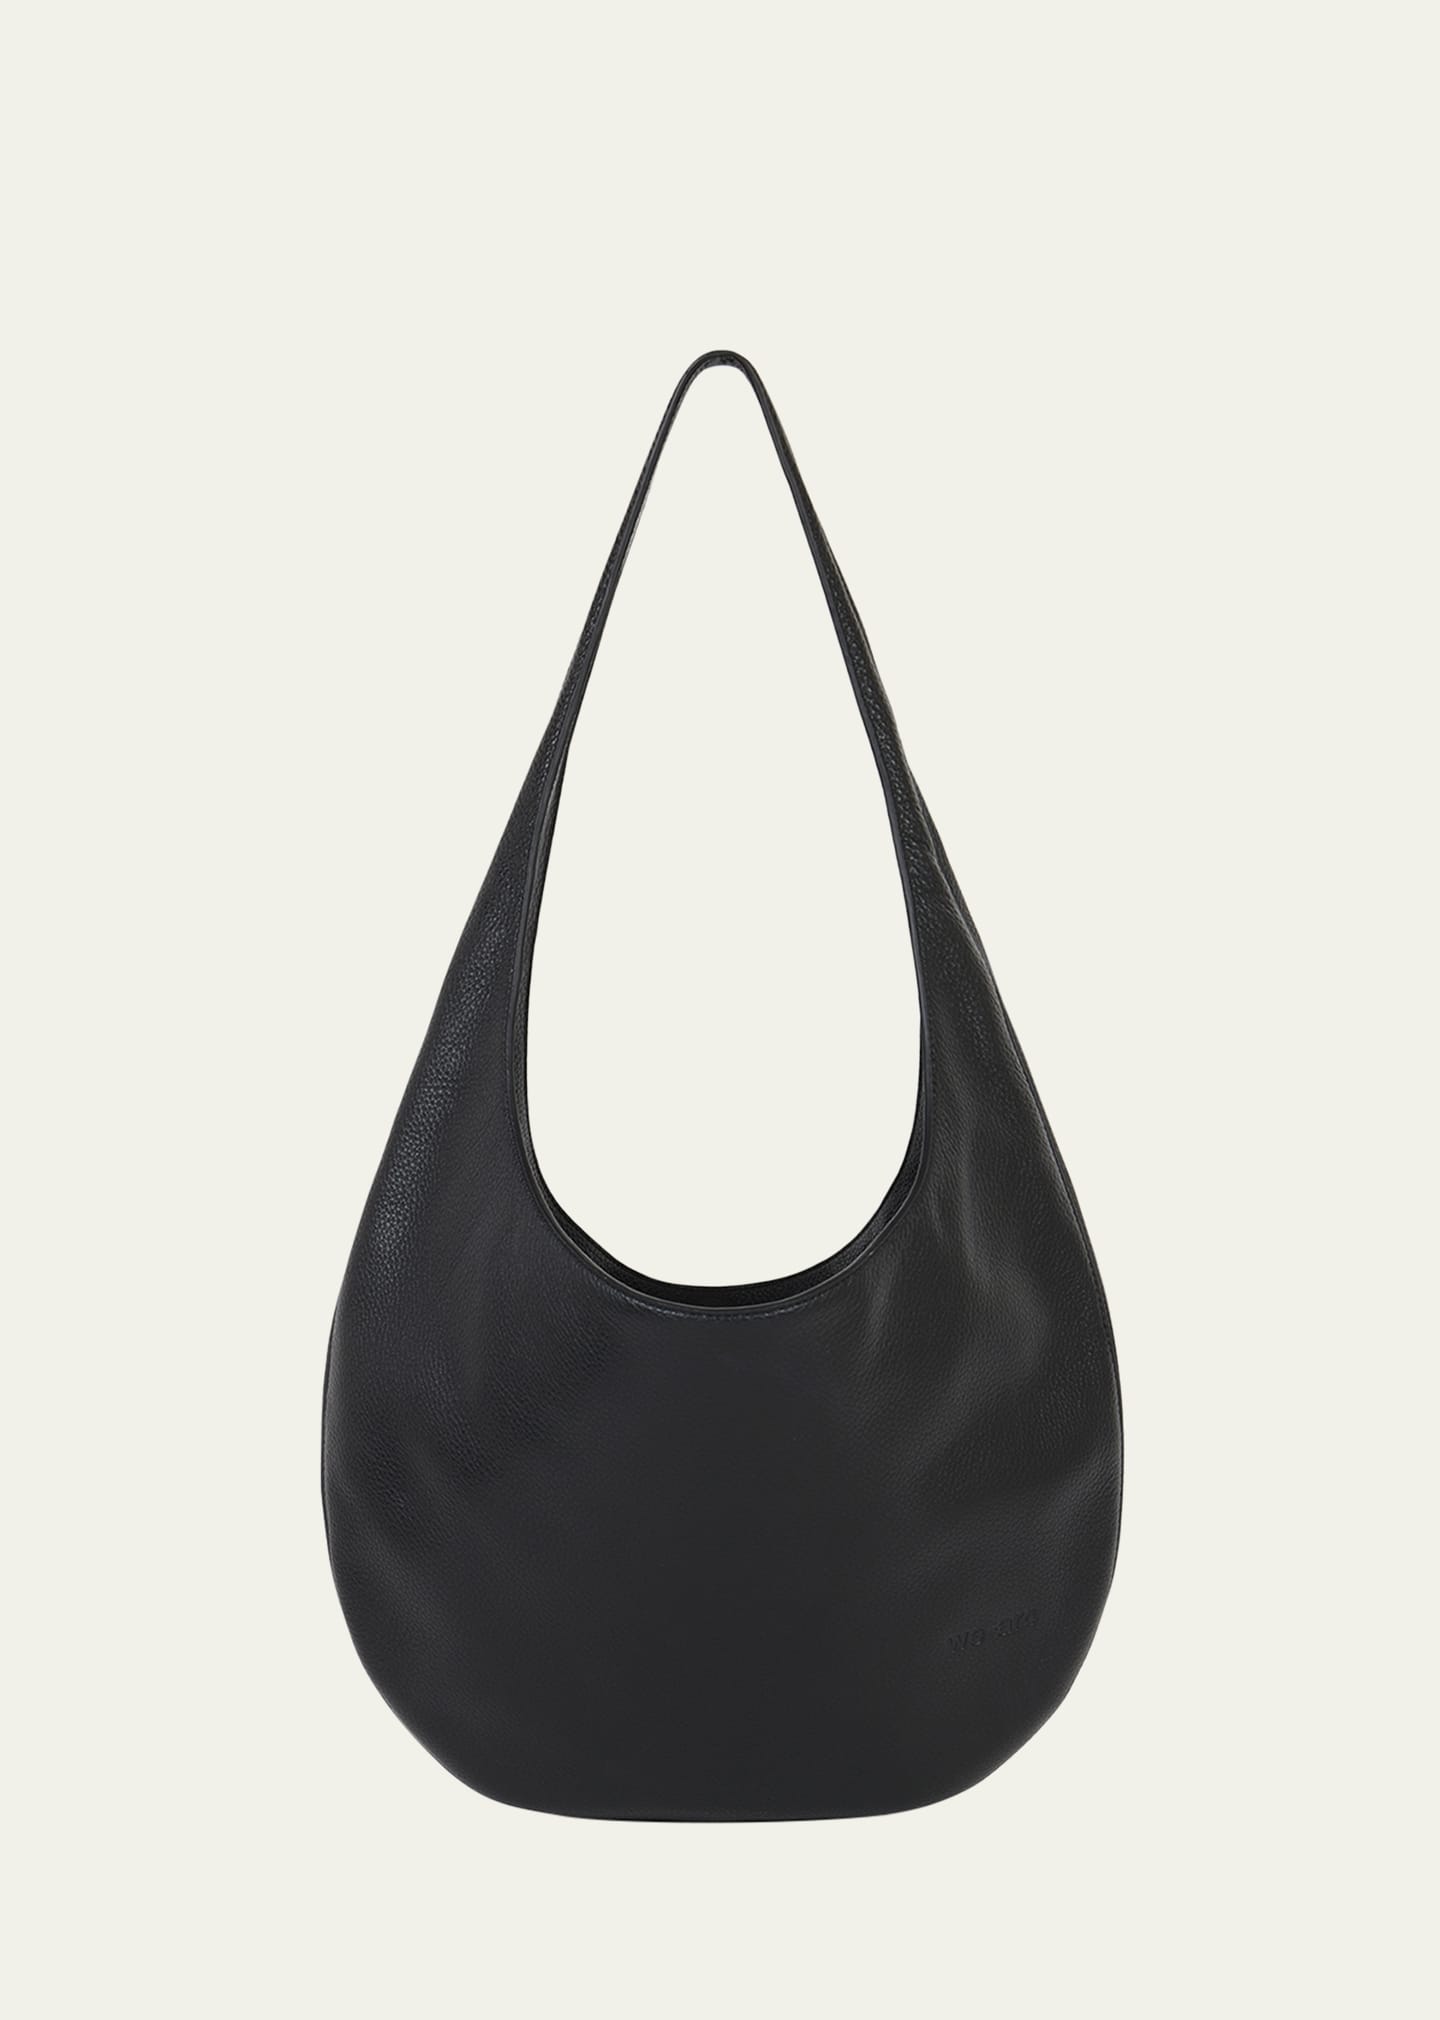 The H Leather Hobo Bag